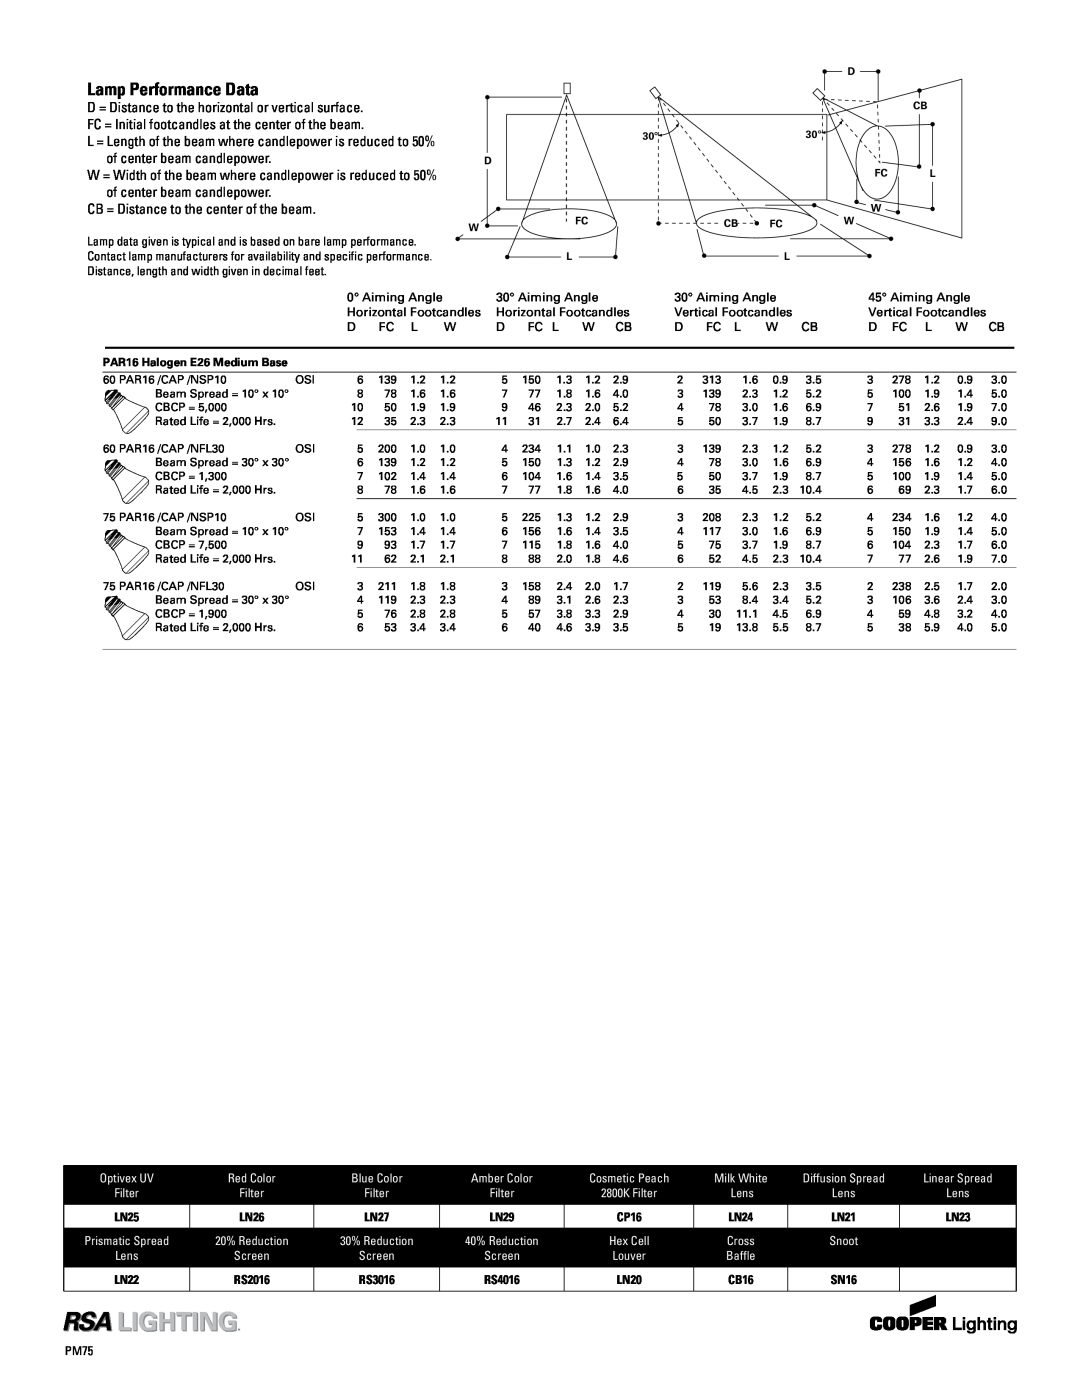 Cooper Lighting PM221ob, PM621ob, PM421ob, PM121ob specifications Lamp Performance Data 